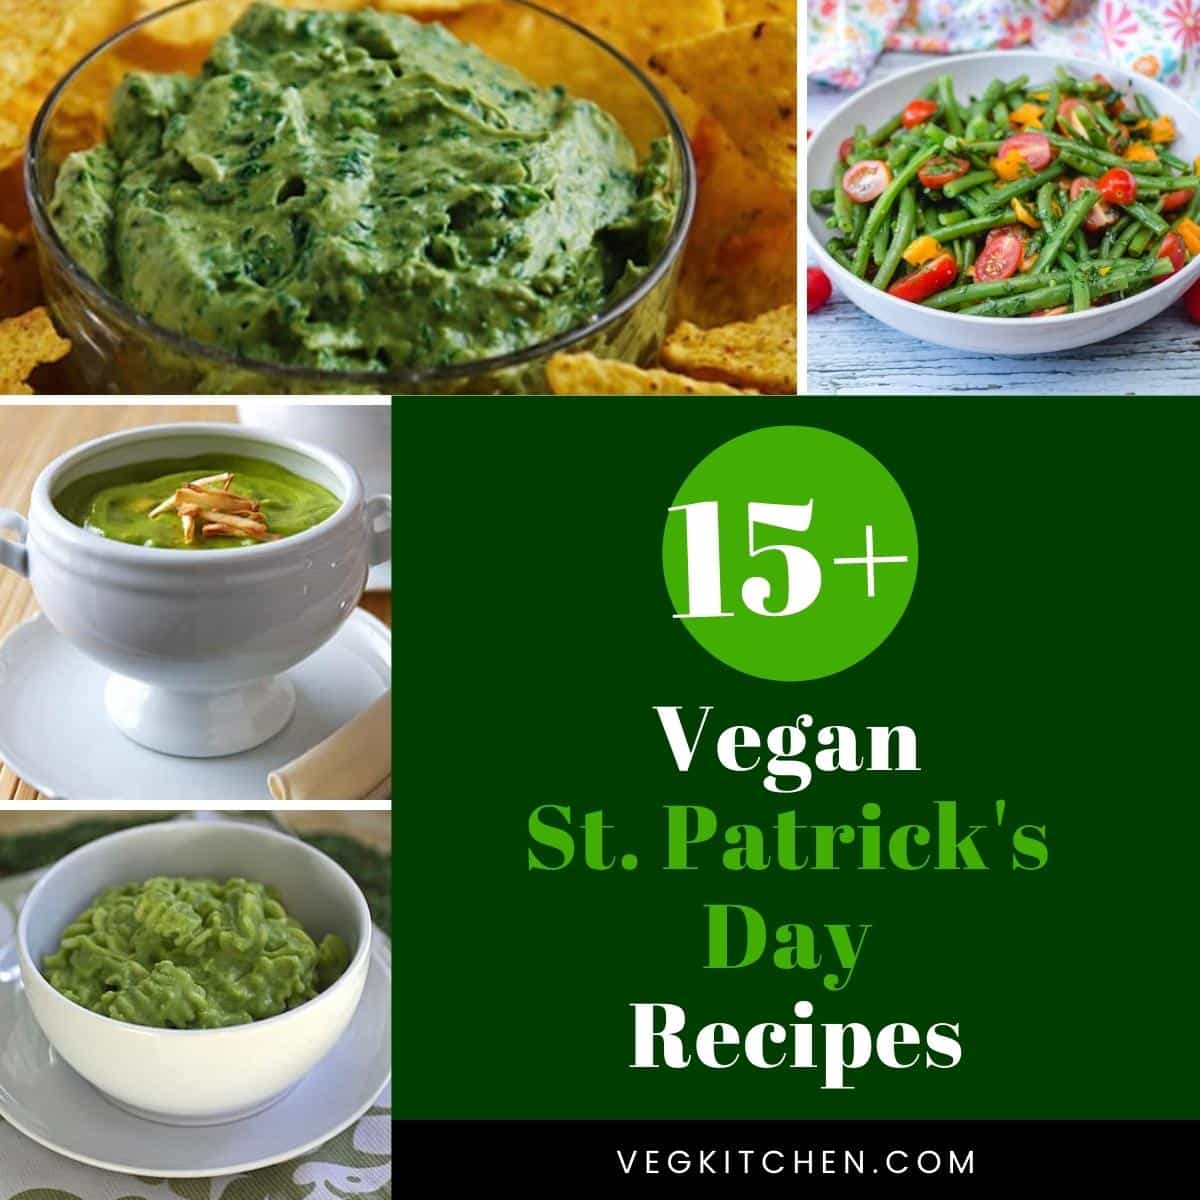 Vegan recipes for St. Patrick's Day